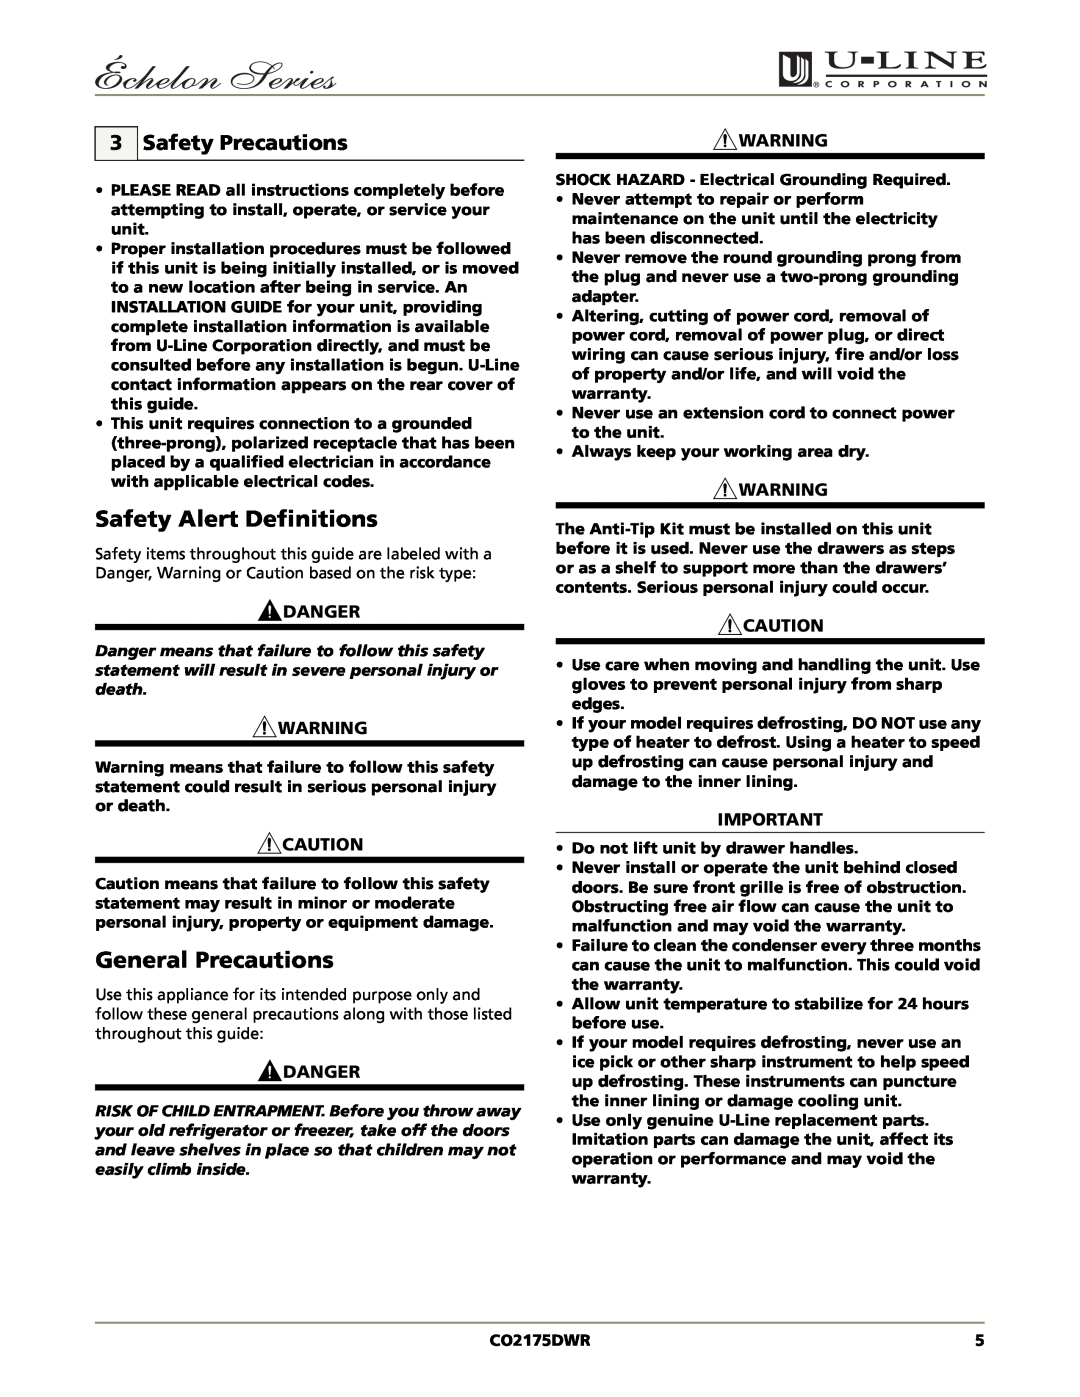 U-Line CO2175DWR manual Safety Alert Definitions, General Precautions, 3Safety Precautions, Danger 